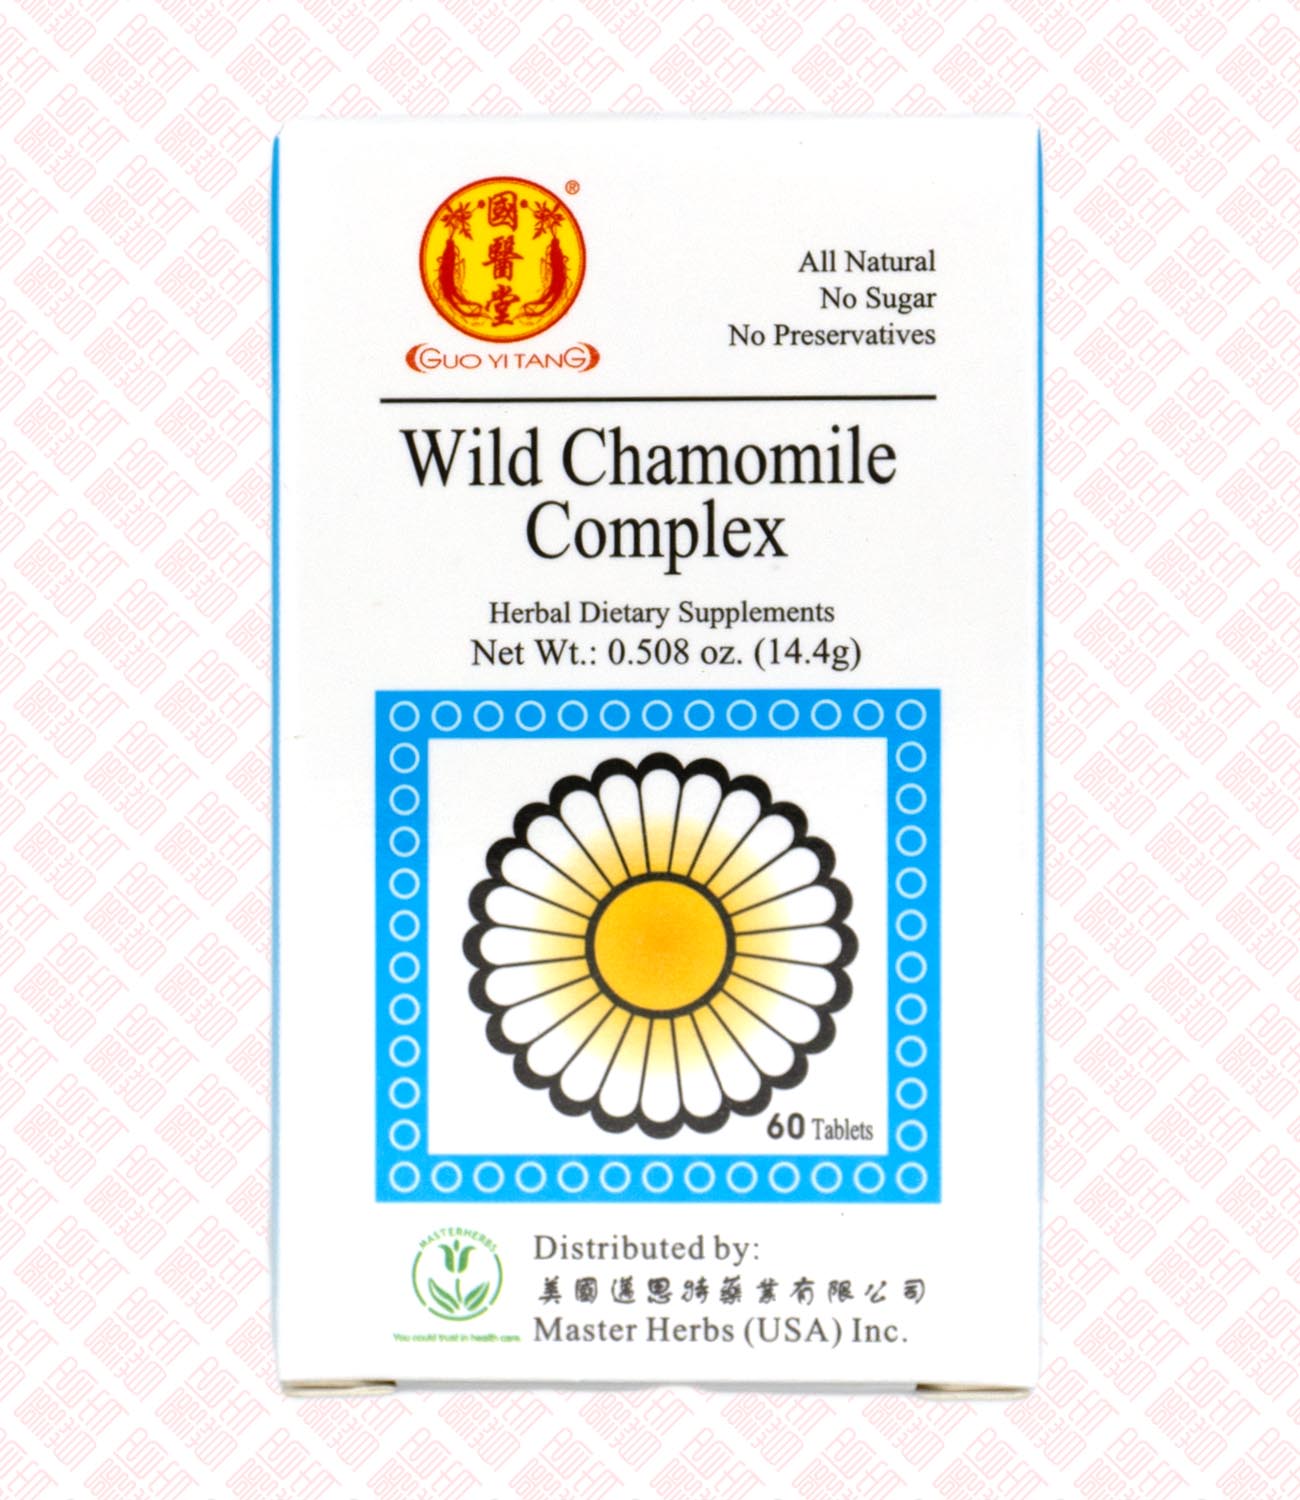 Wild Chamomile Complex 复方珍菊降压片 UPC 6577946020101